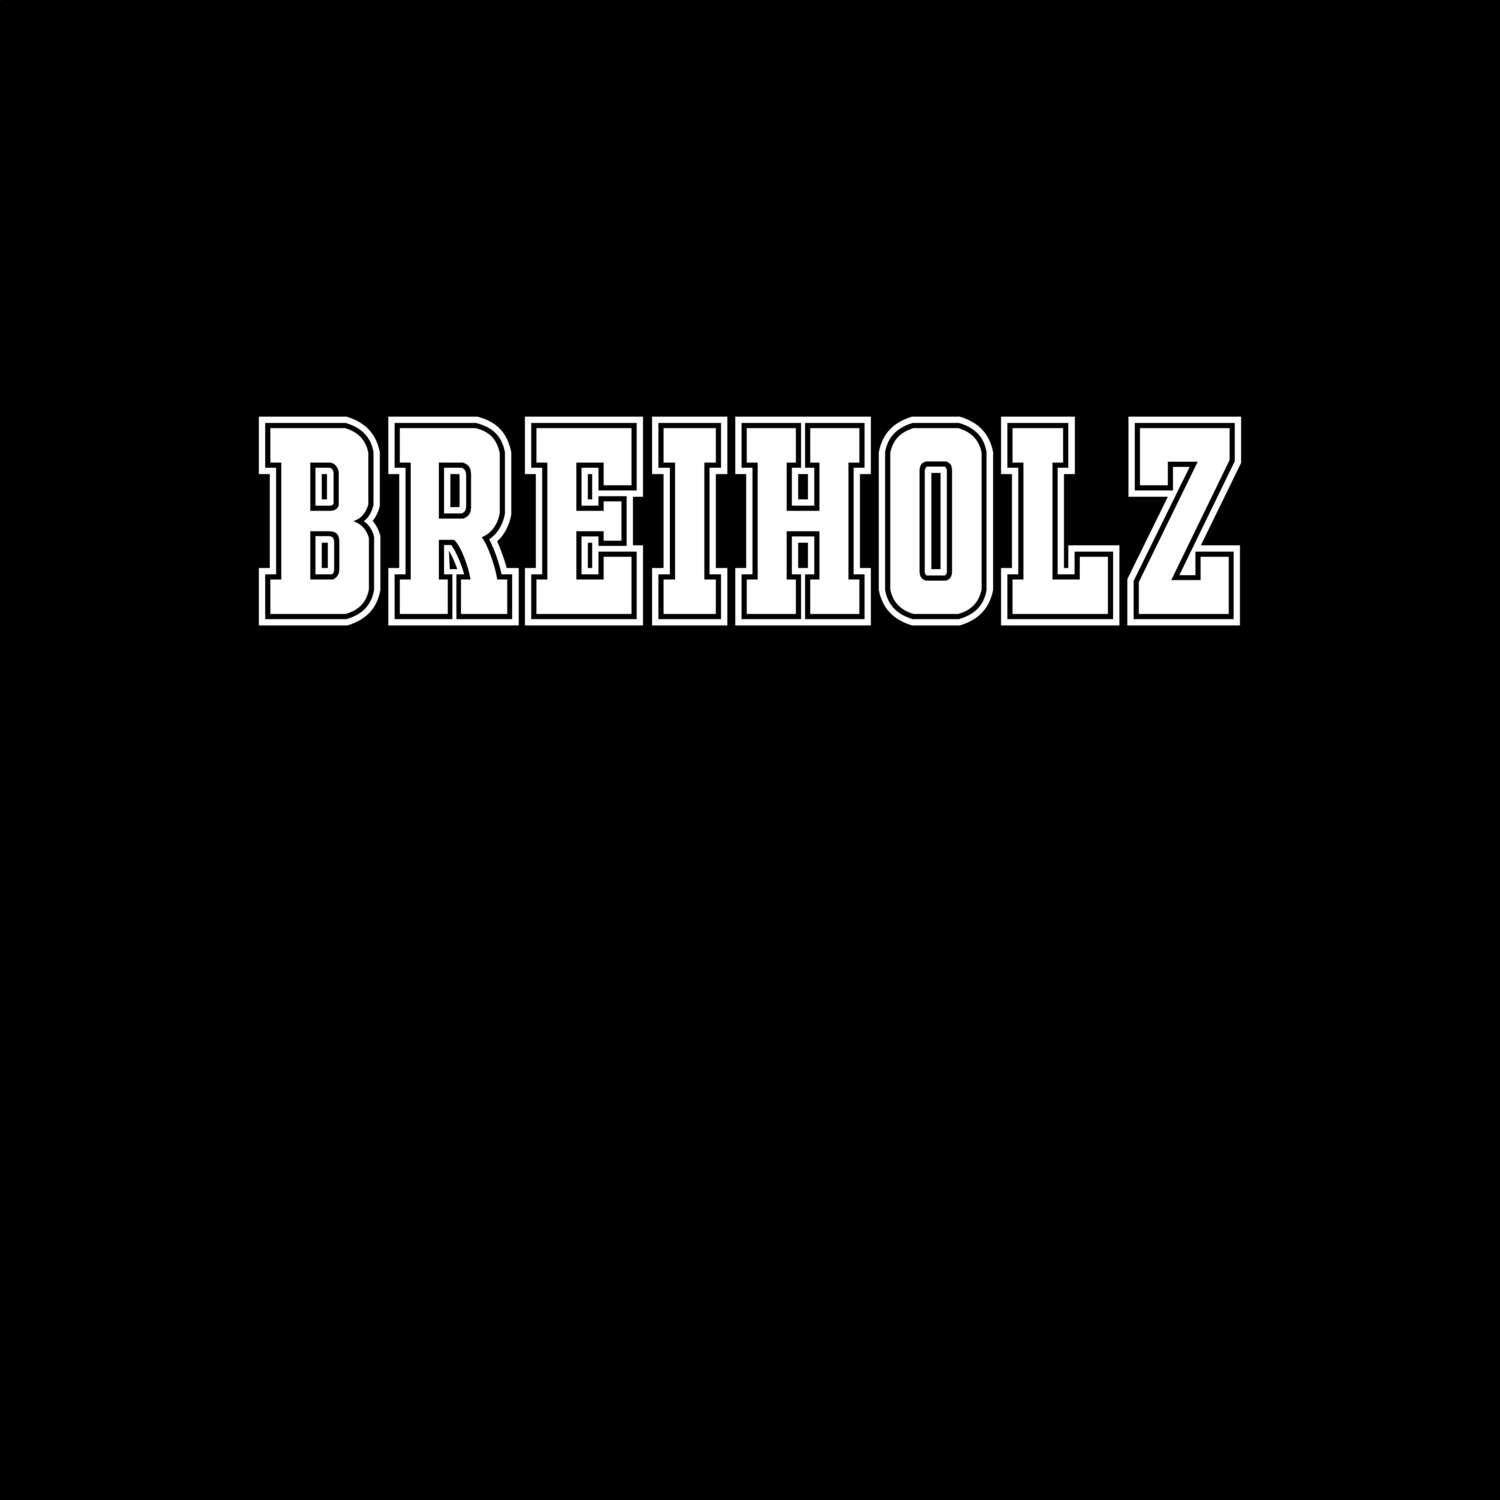 Breiholz T-Shirt »Classic«